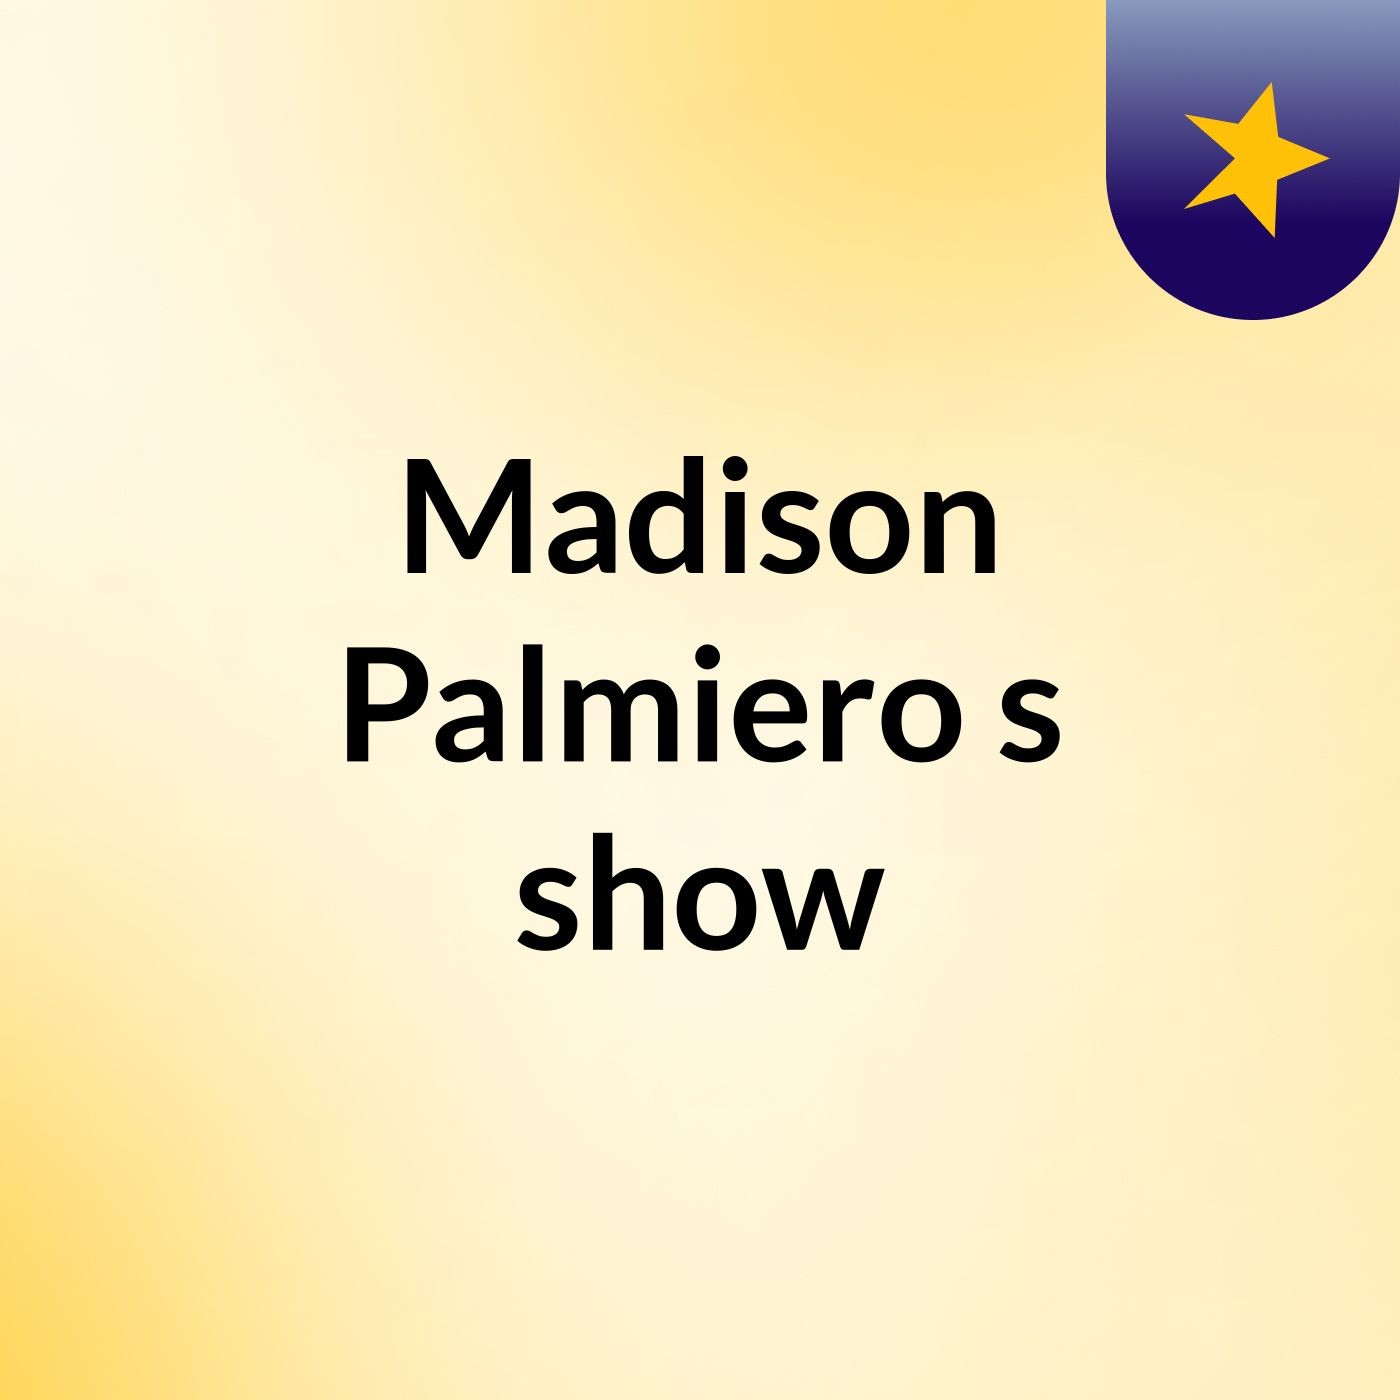 Madison Palmiero's show